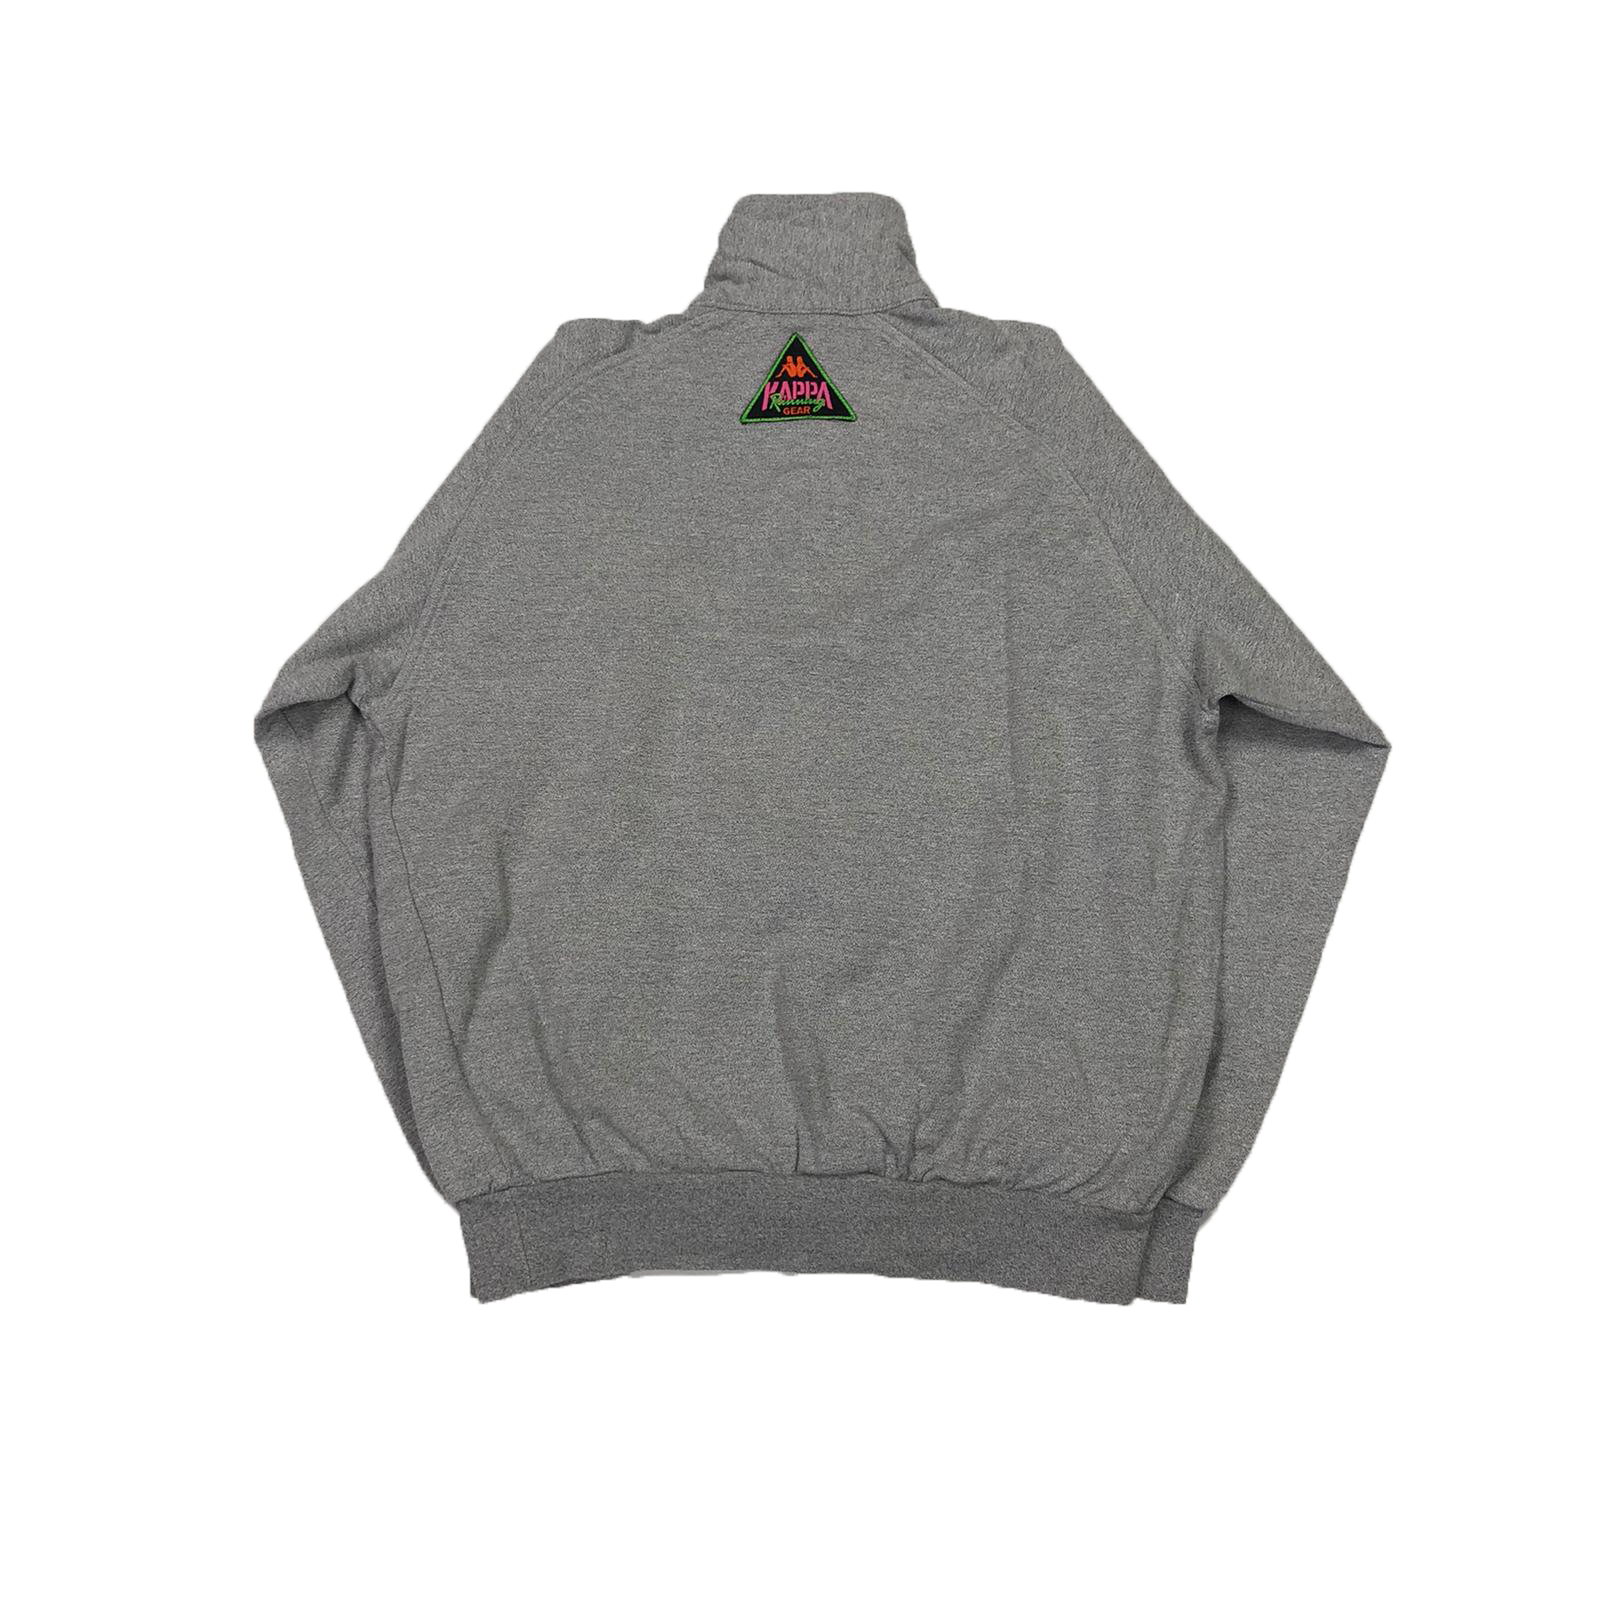 90's Kappa 1/4 zip sweatshirt